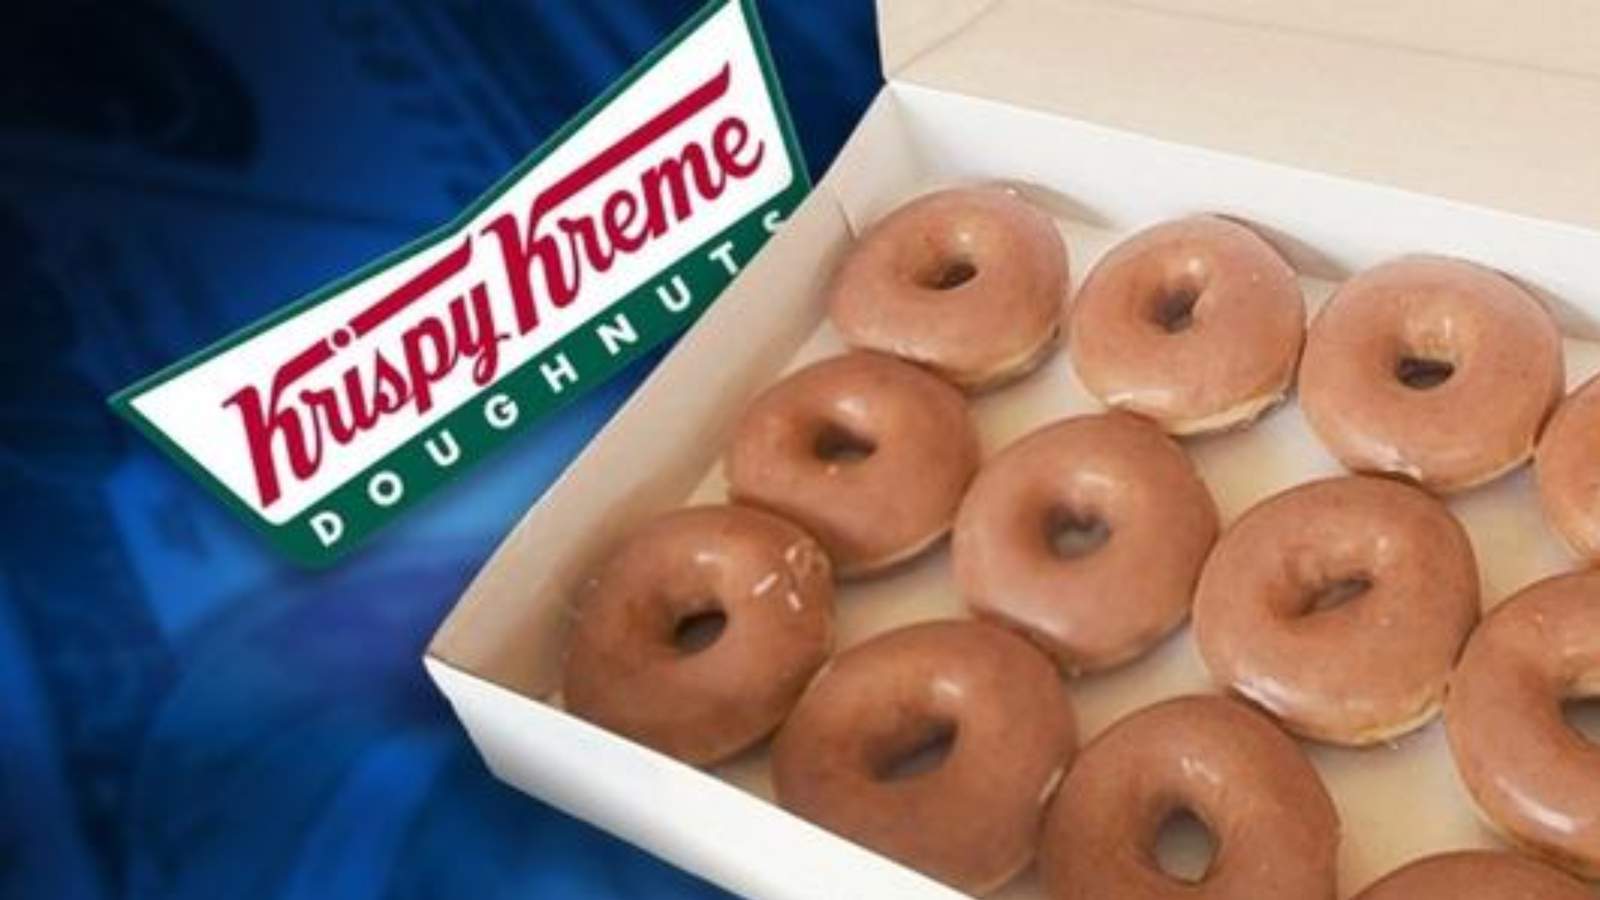 Krispy Kreme offering free dozen of doughnuts to Class of 2020 graduates on May 19